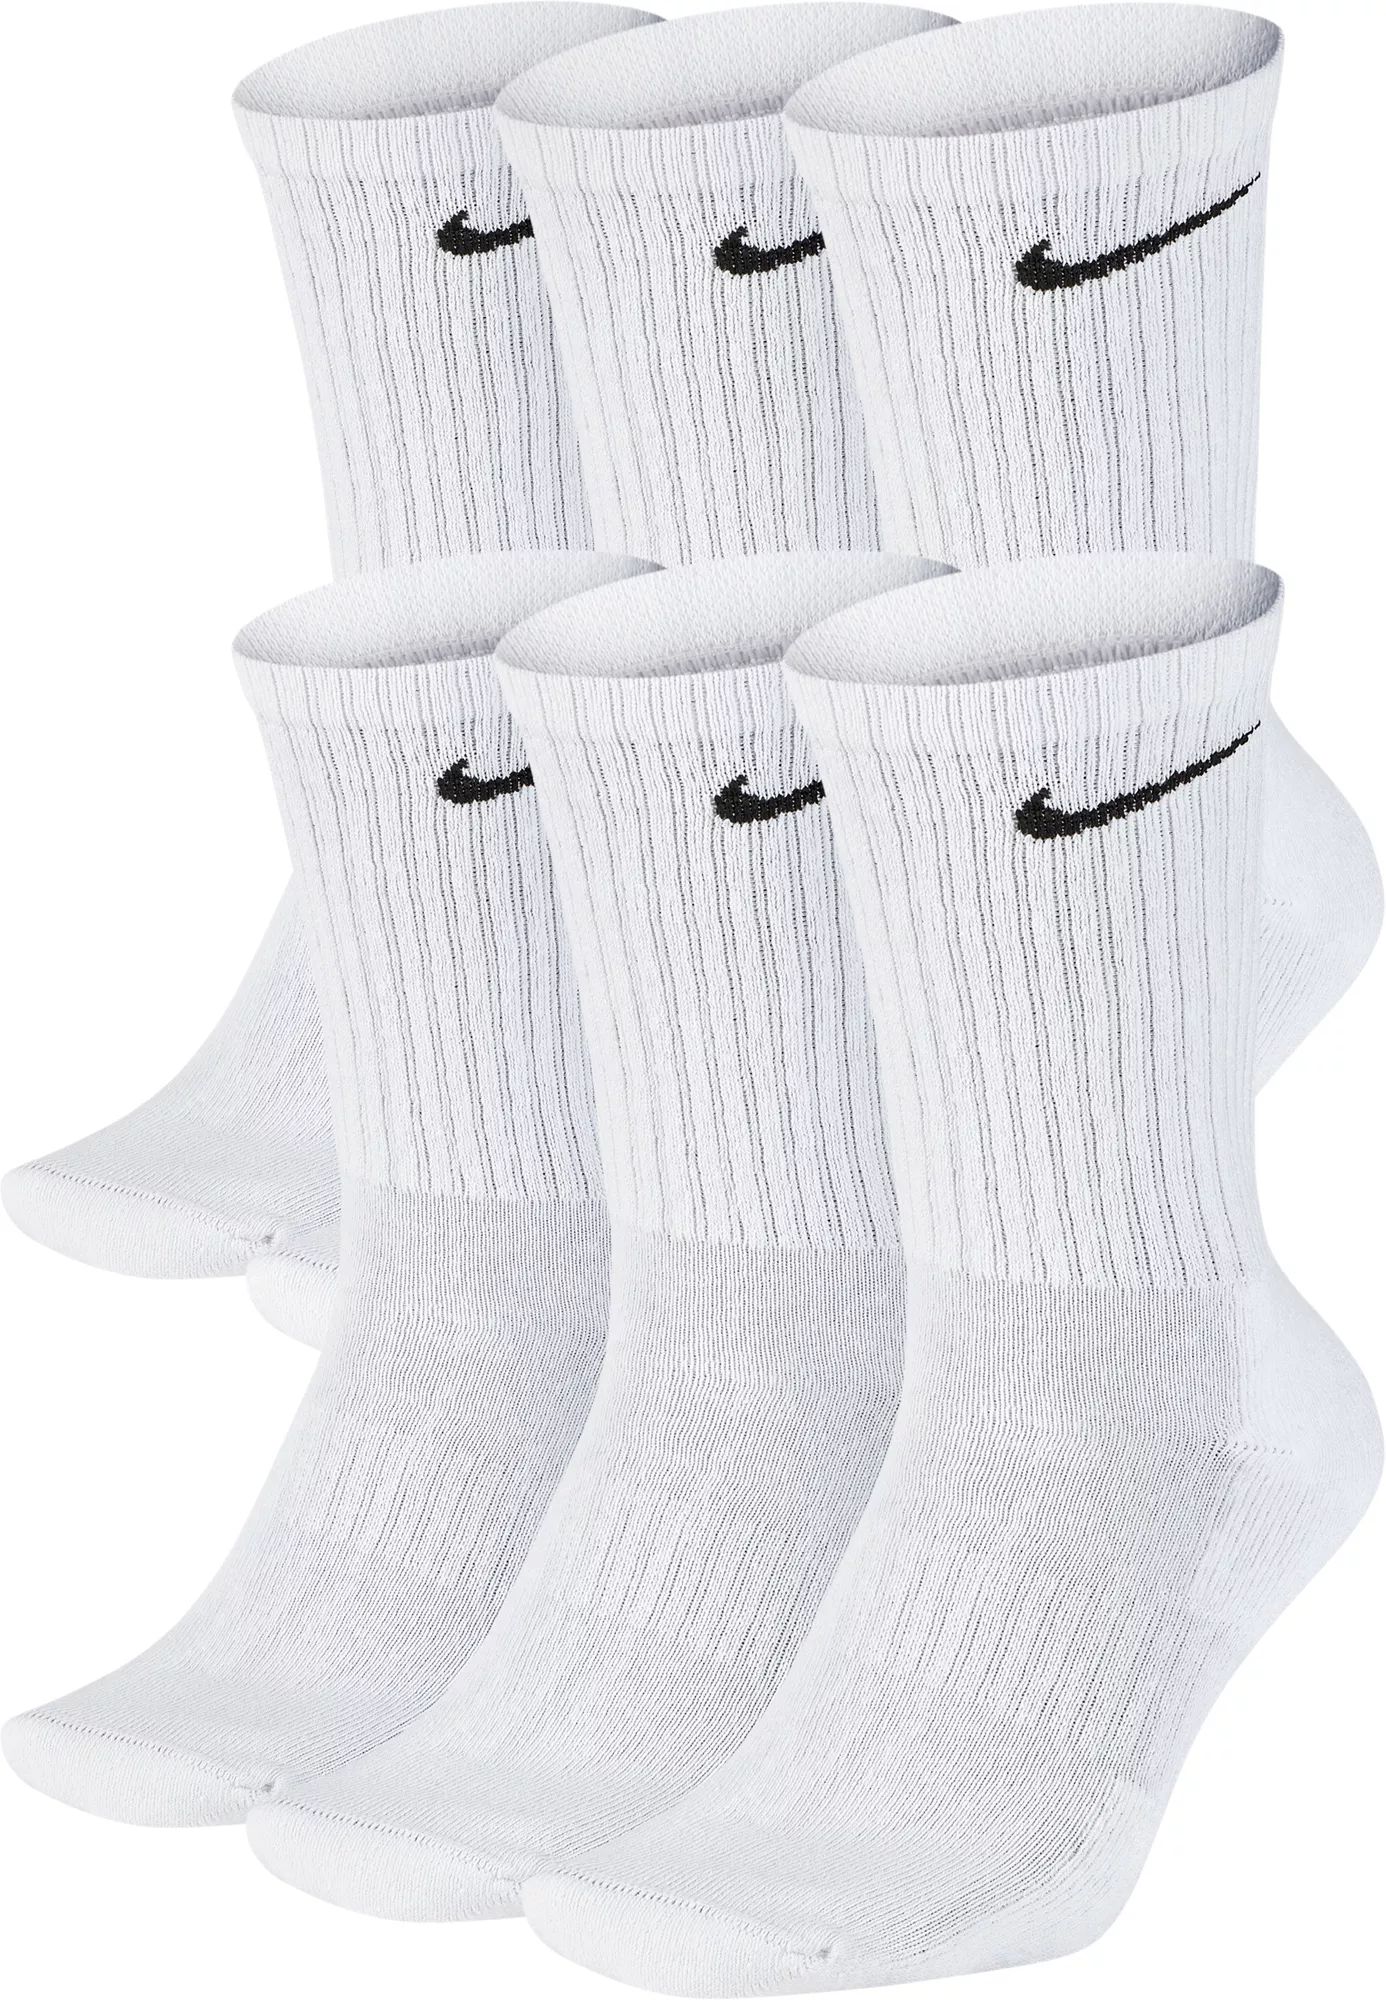 Nike Everyday Cushioned Training Crew Socks – 6 Pack, Men's, Large, White | Dick's Sporting Goods